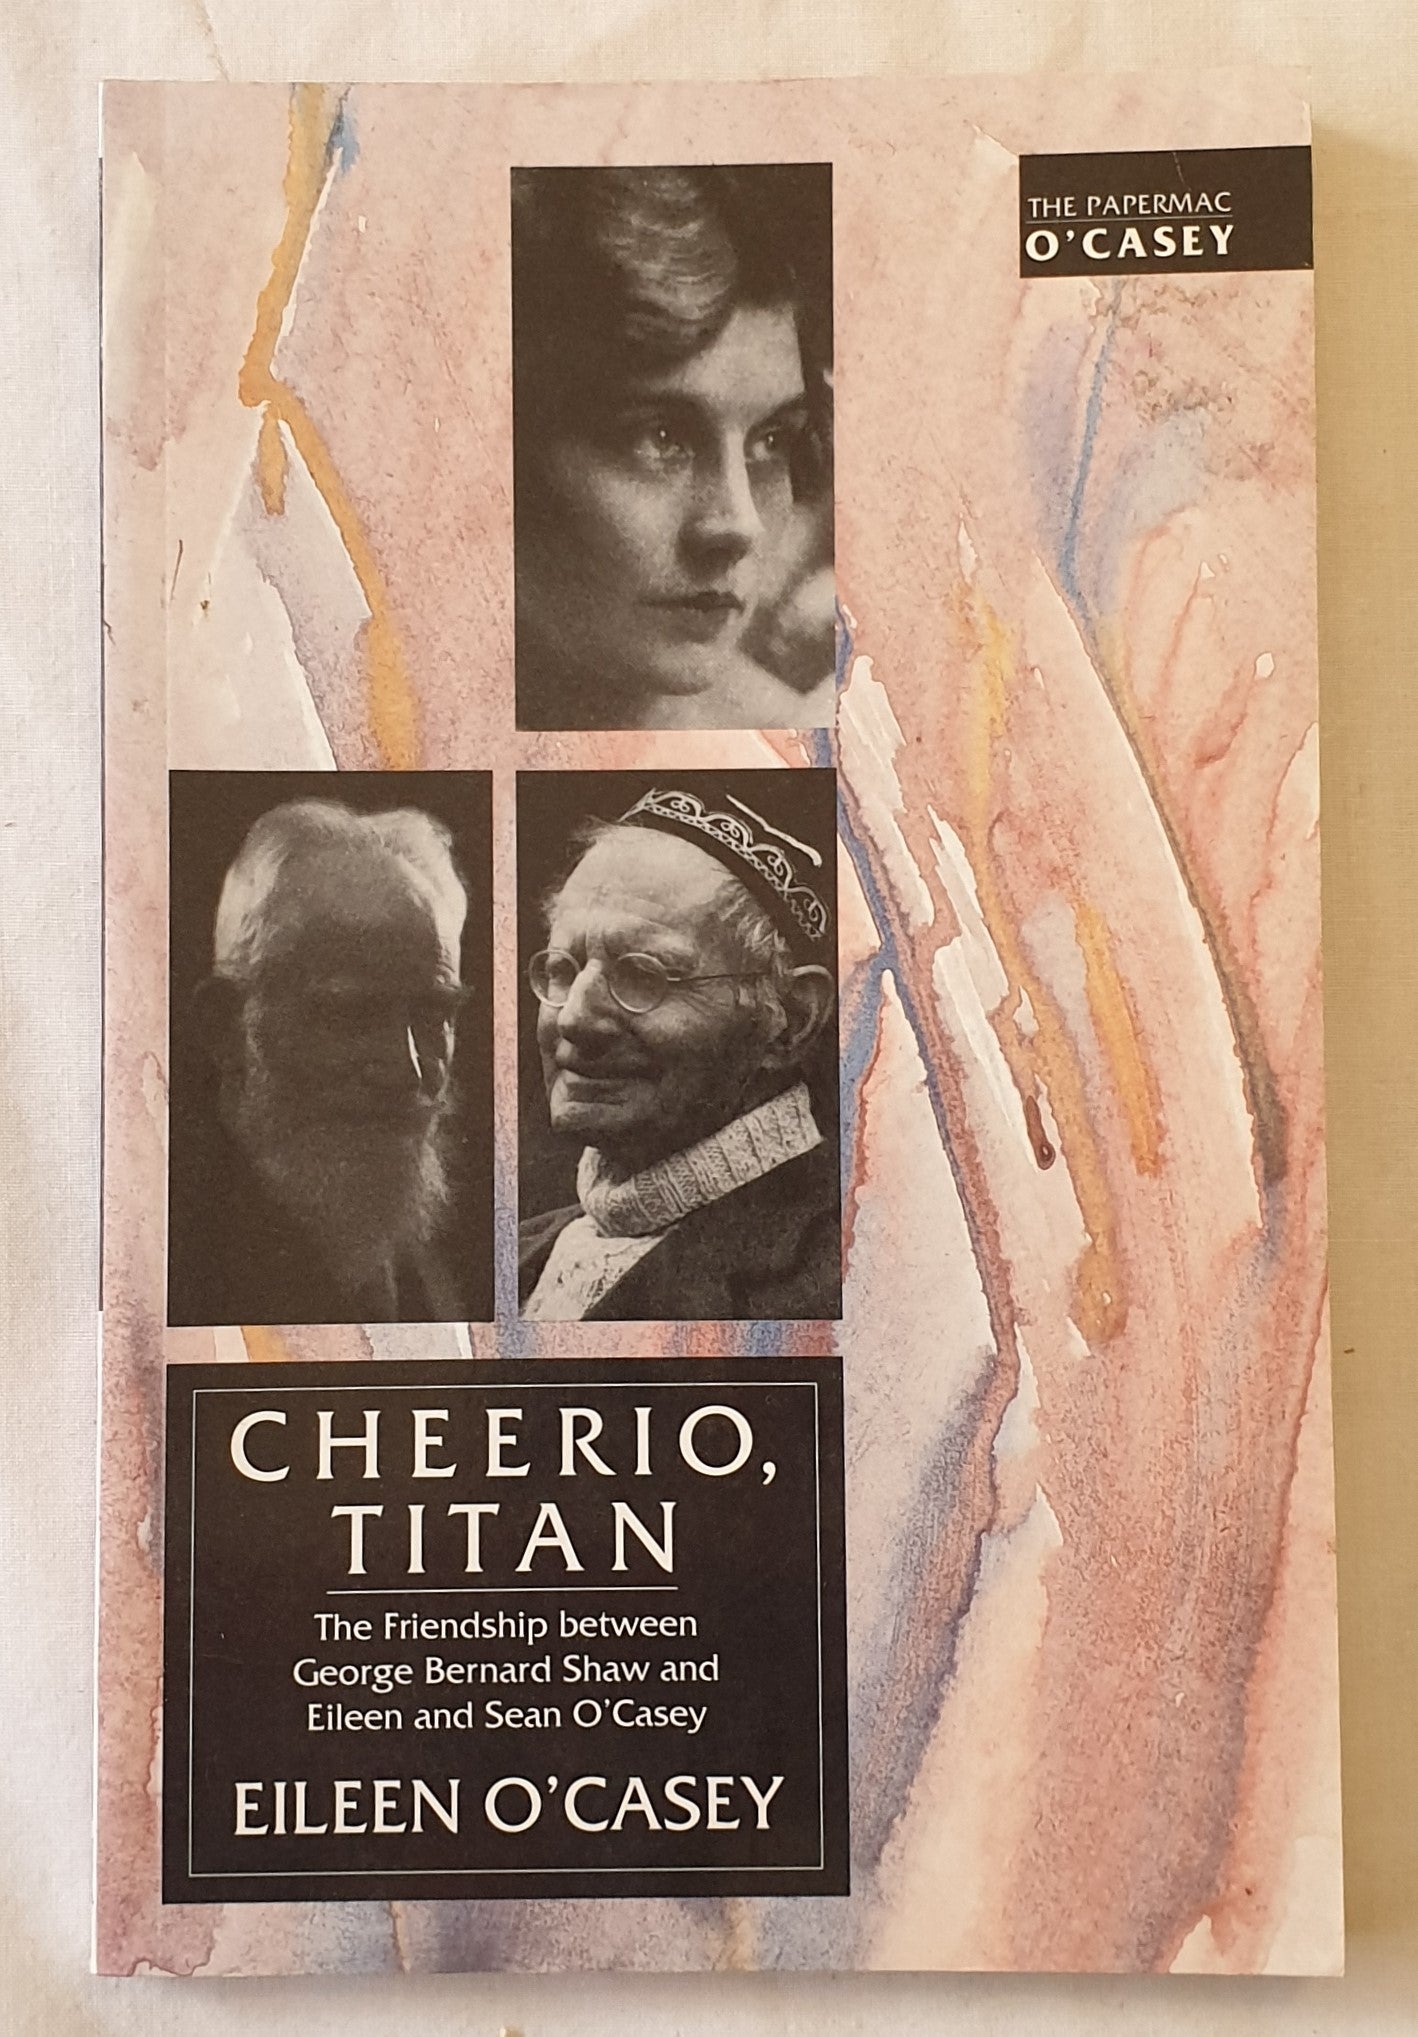 Cheerio, Titan  The Friendship between George Bernard Shaw and Eileen and Sean O’Casey  by Eileen O’Casey